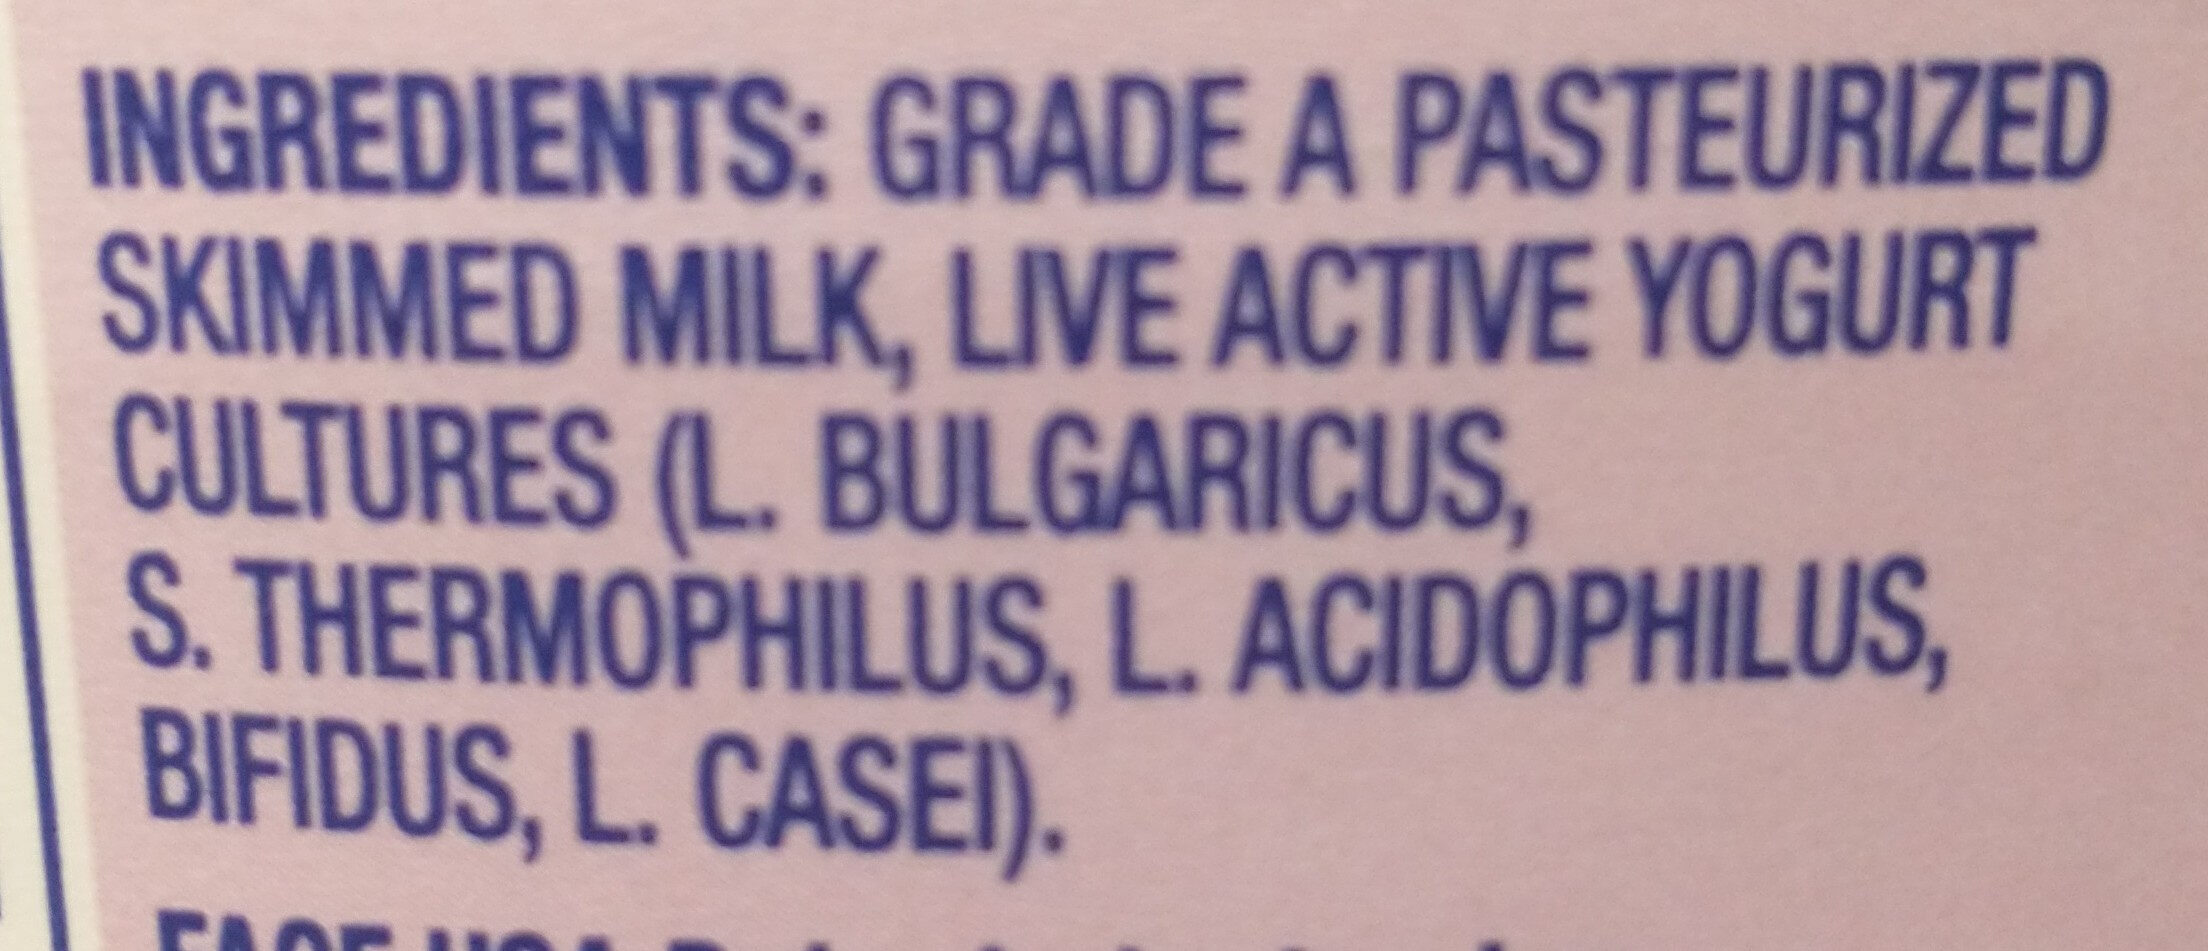 Nonfat greek strained yogurt - Ingredients